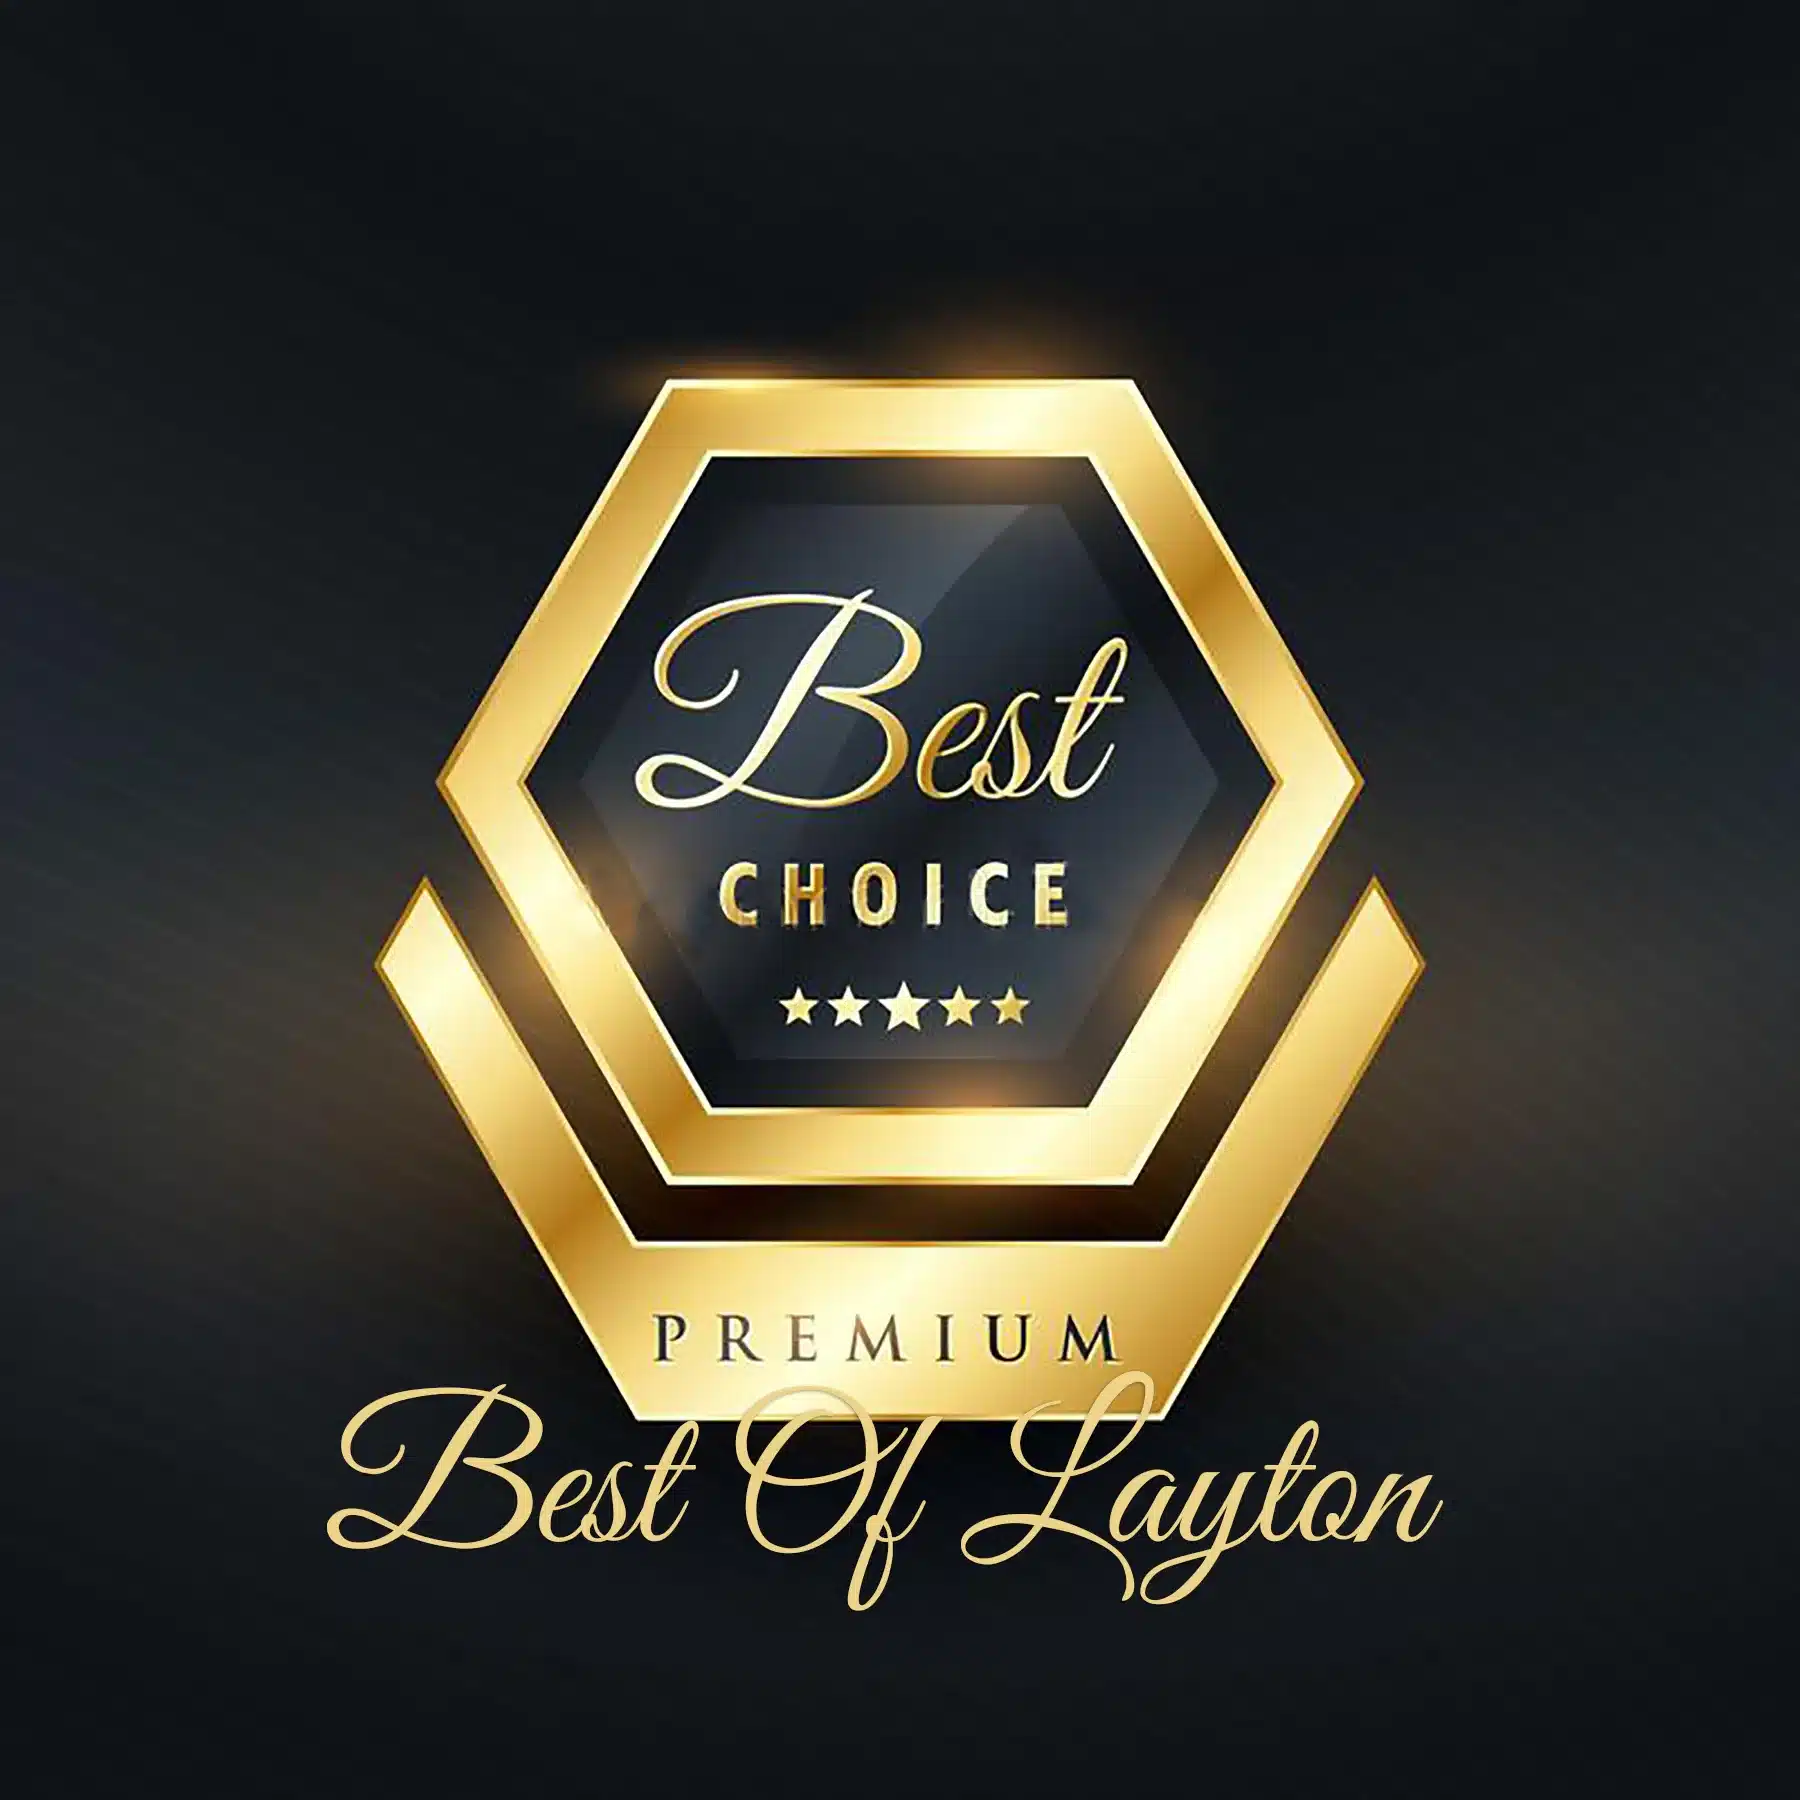 Best of Layton awards